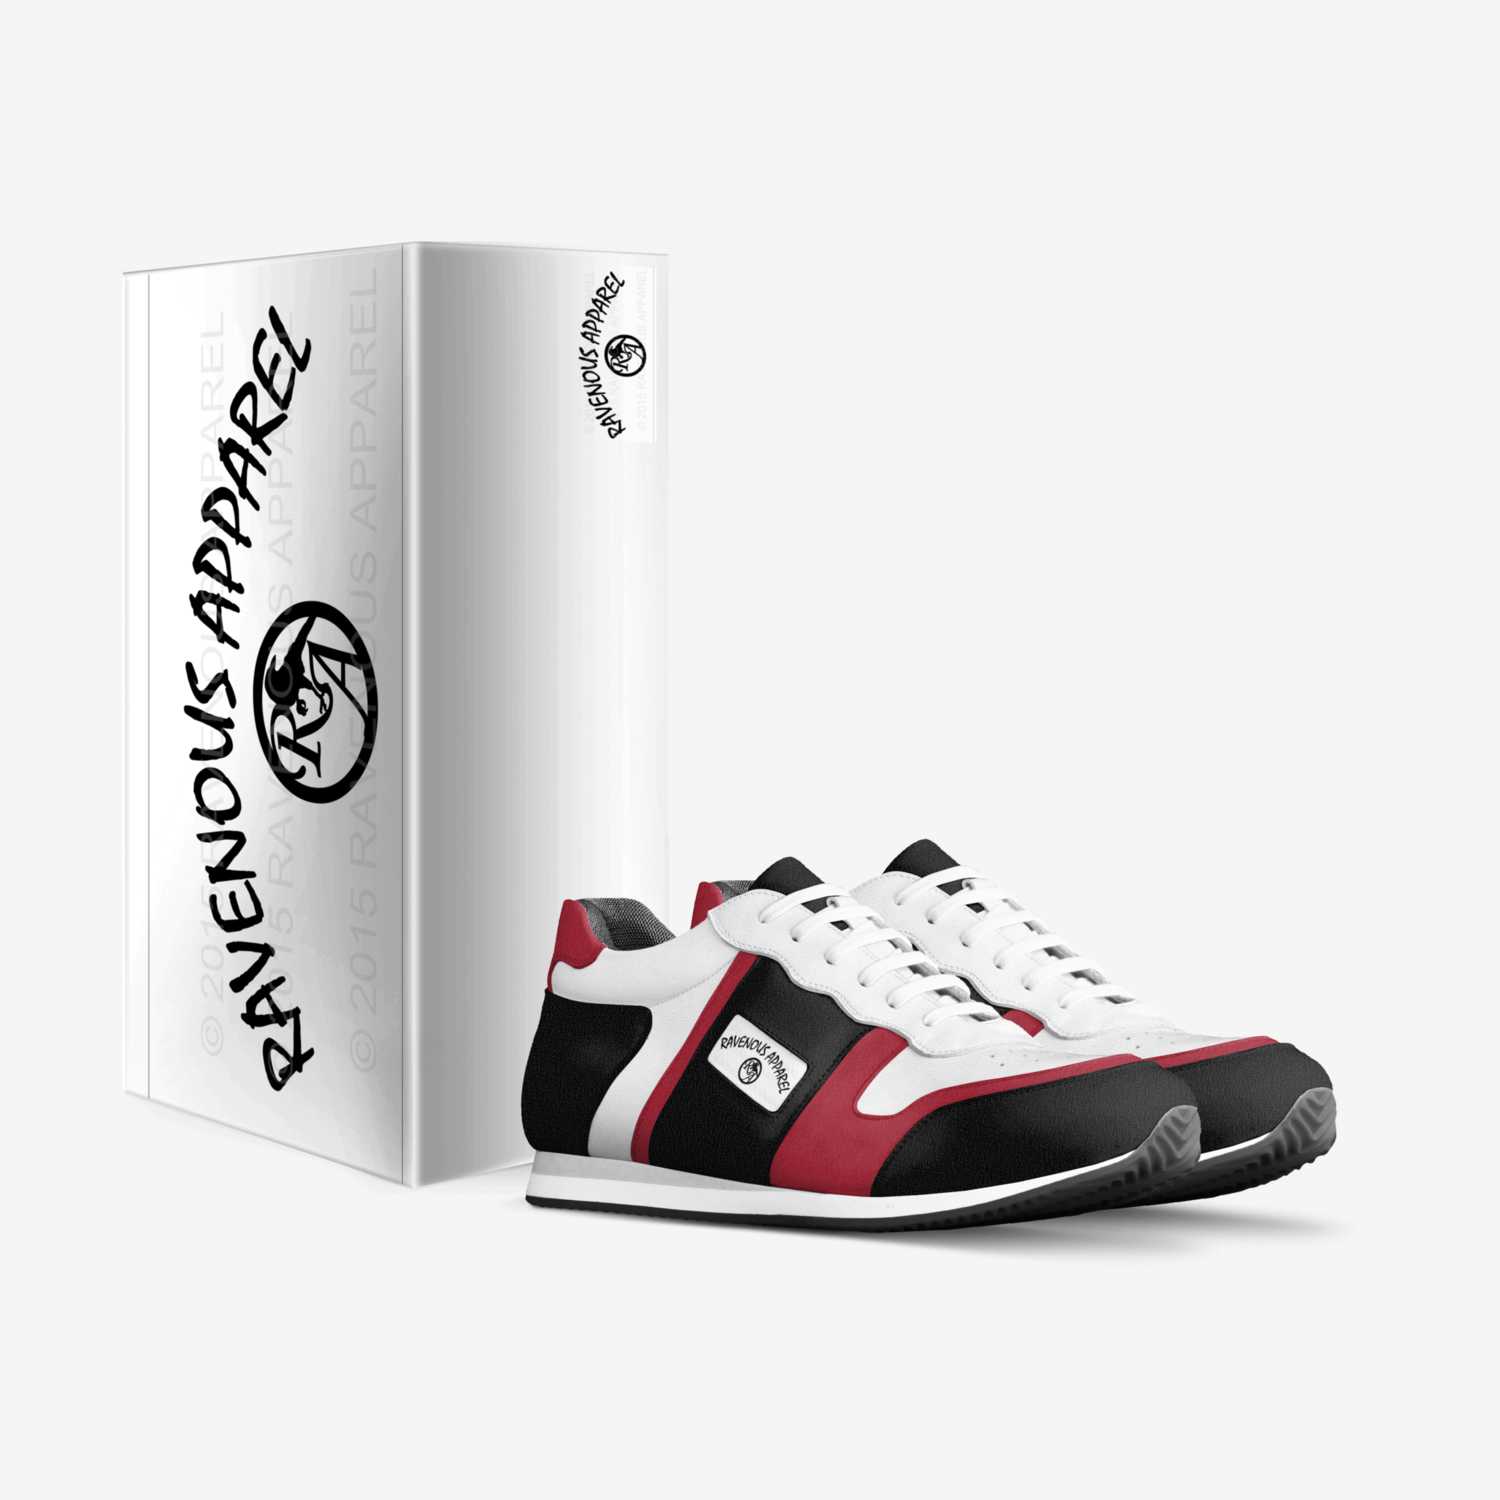 RA/RWB custom made in Italy shoes by Thomas Rodriguez | Box view